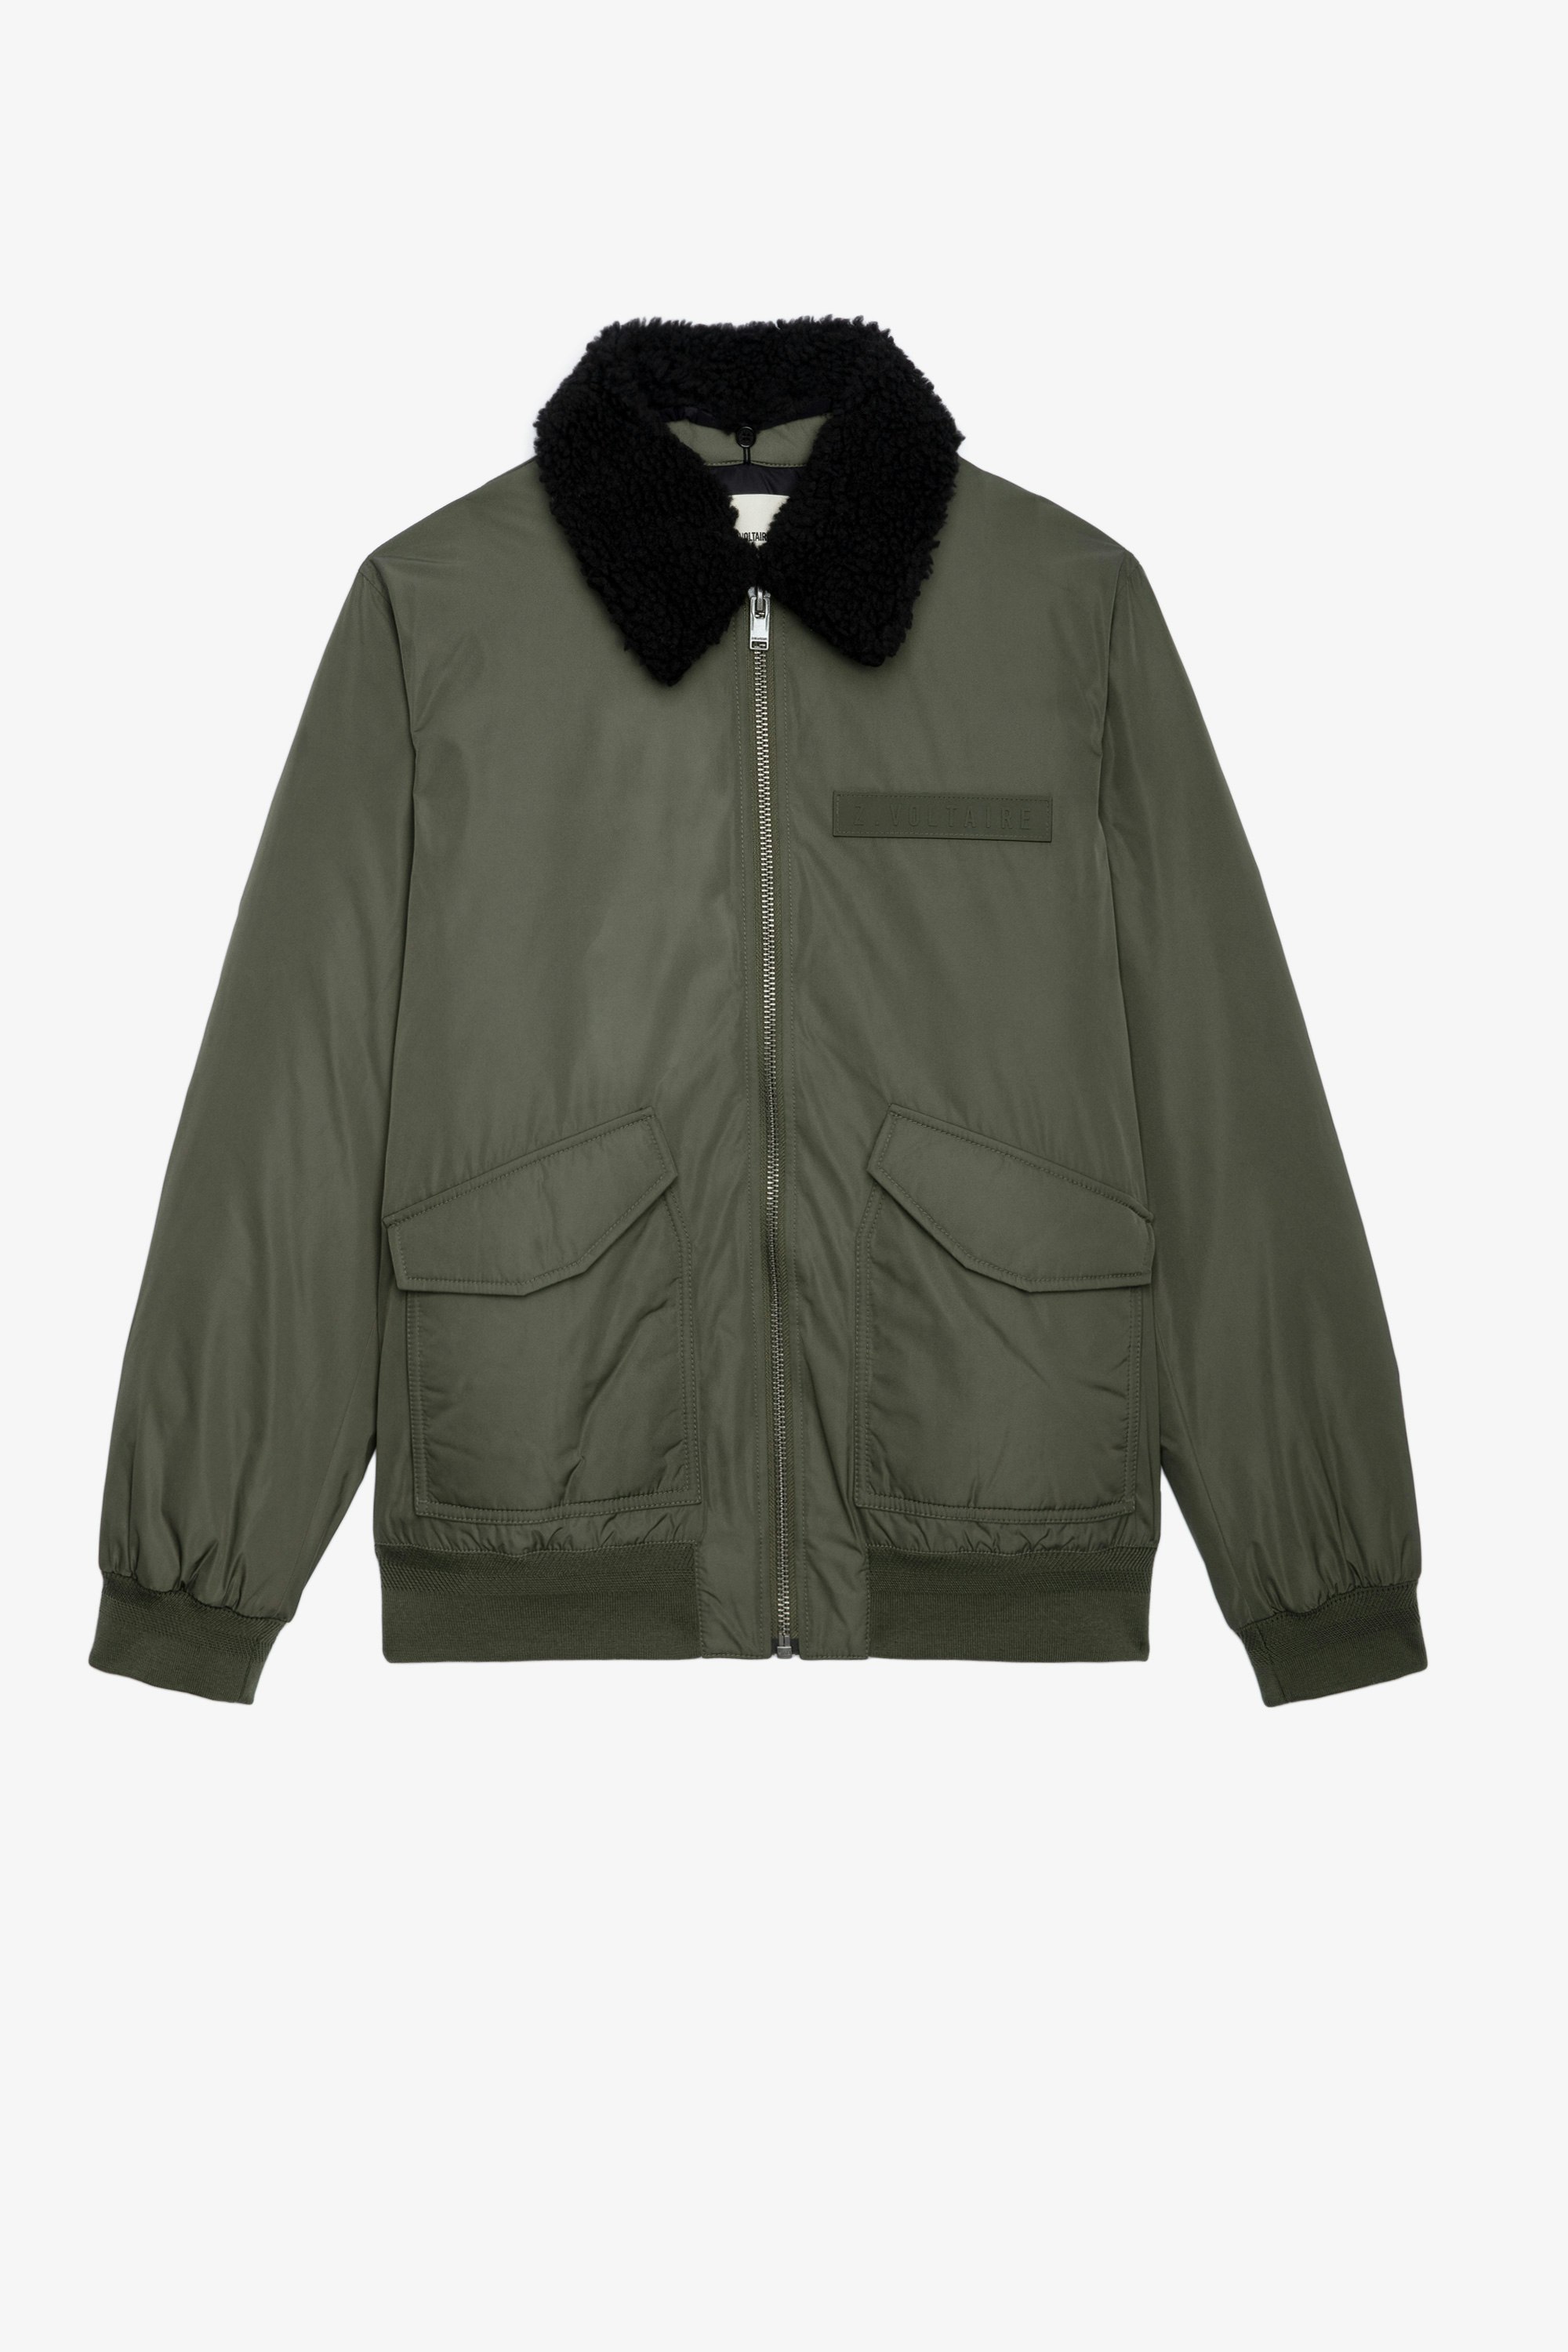 Mate Nylon Bomber ジャケット Men’s Khaki military bomber jacket with removable faux fur collar